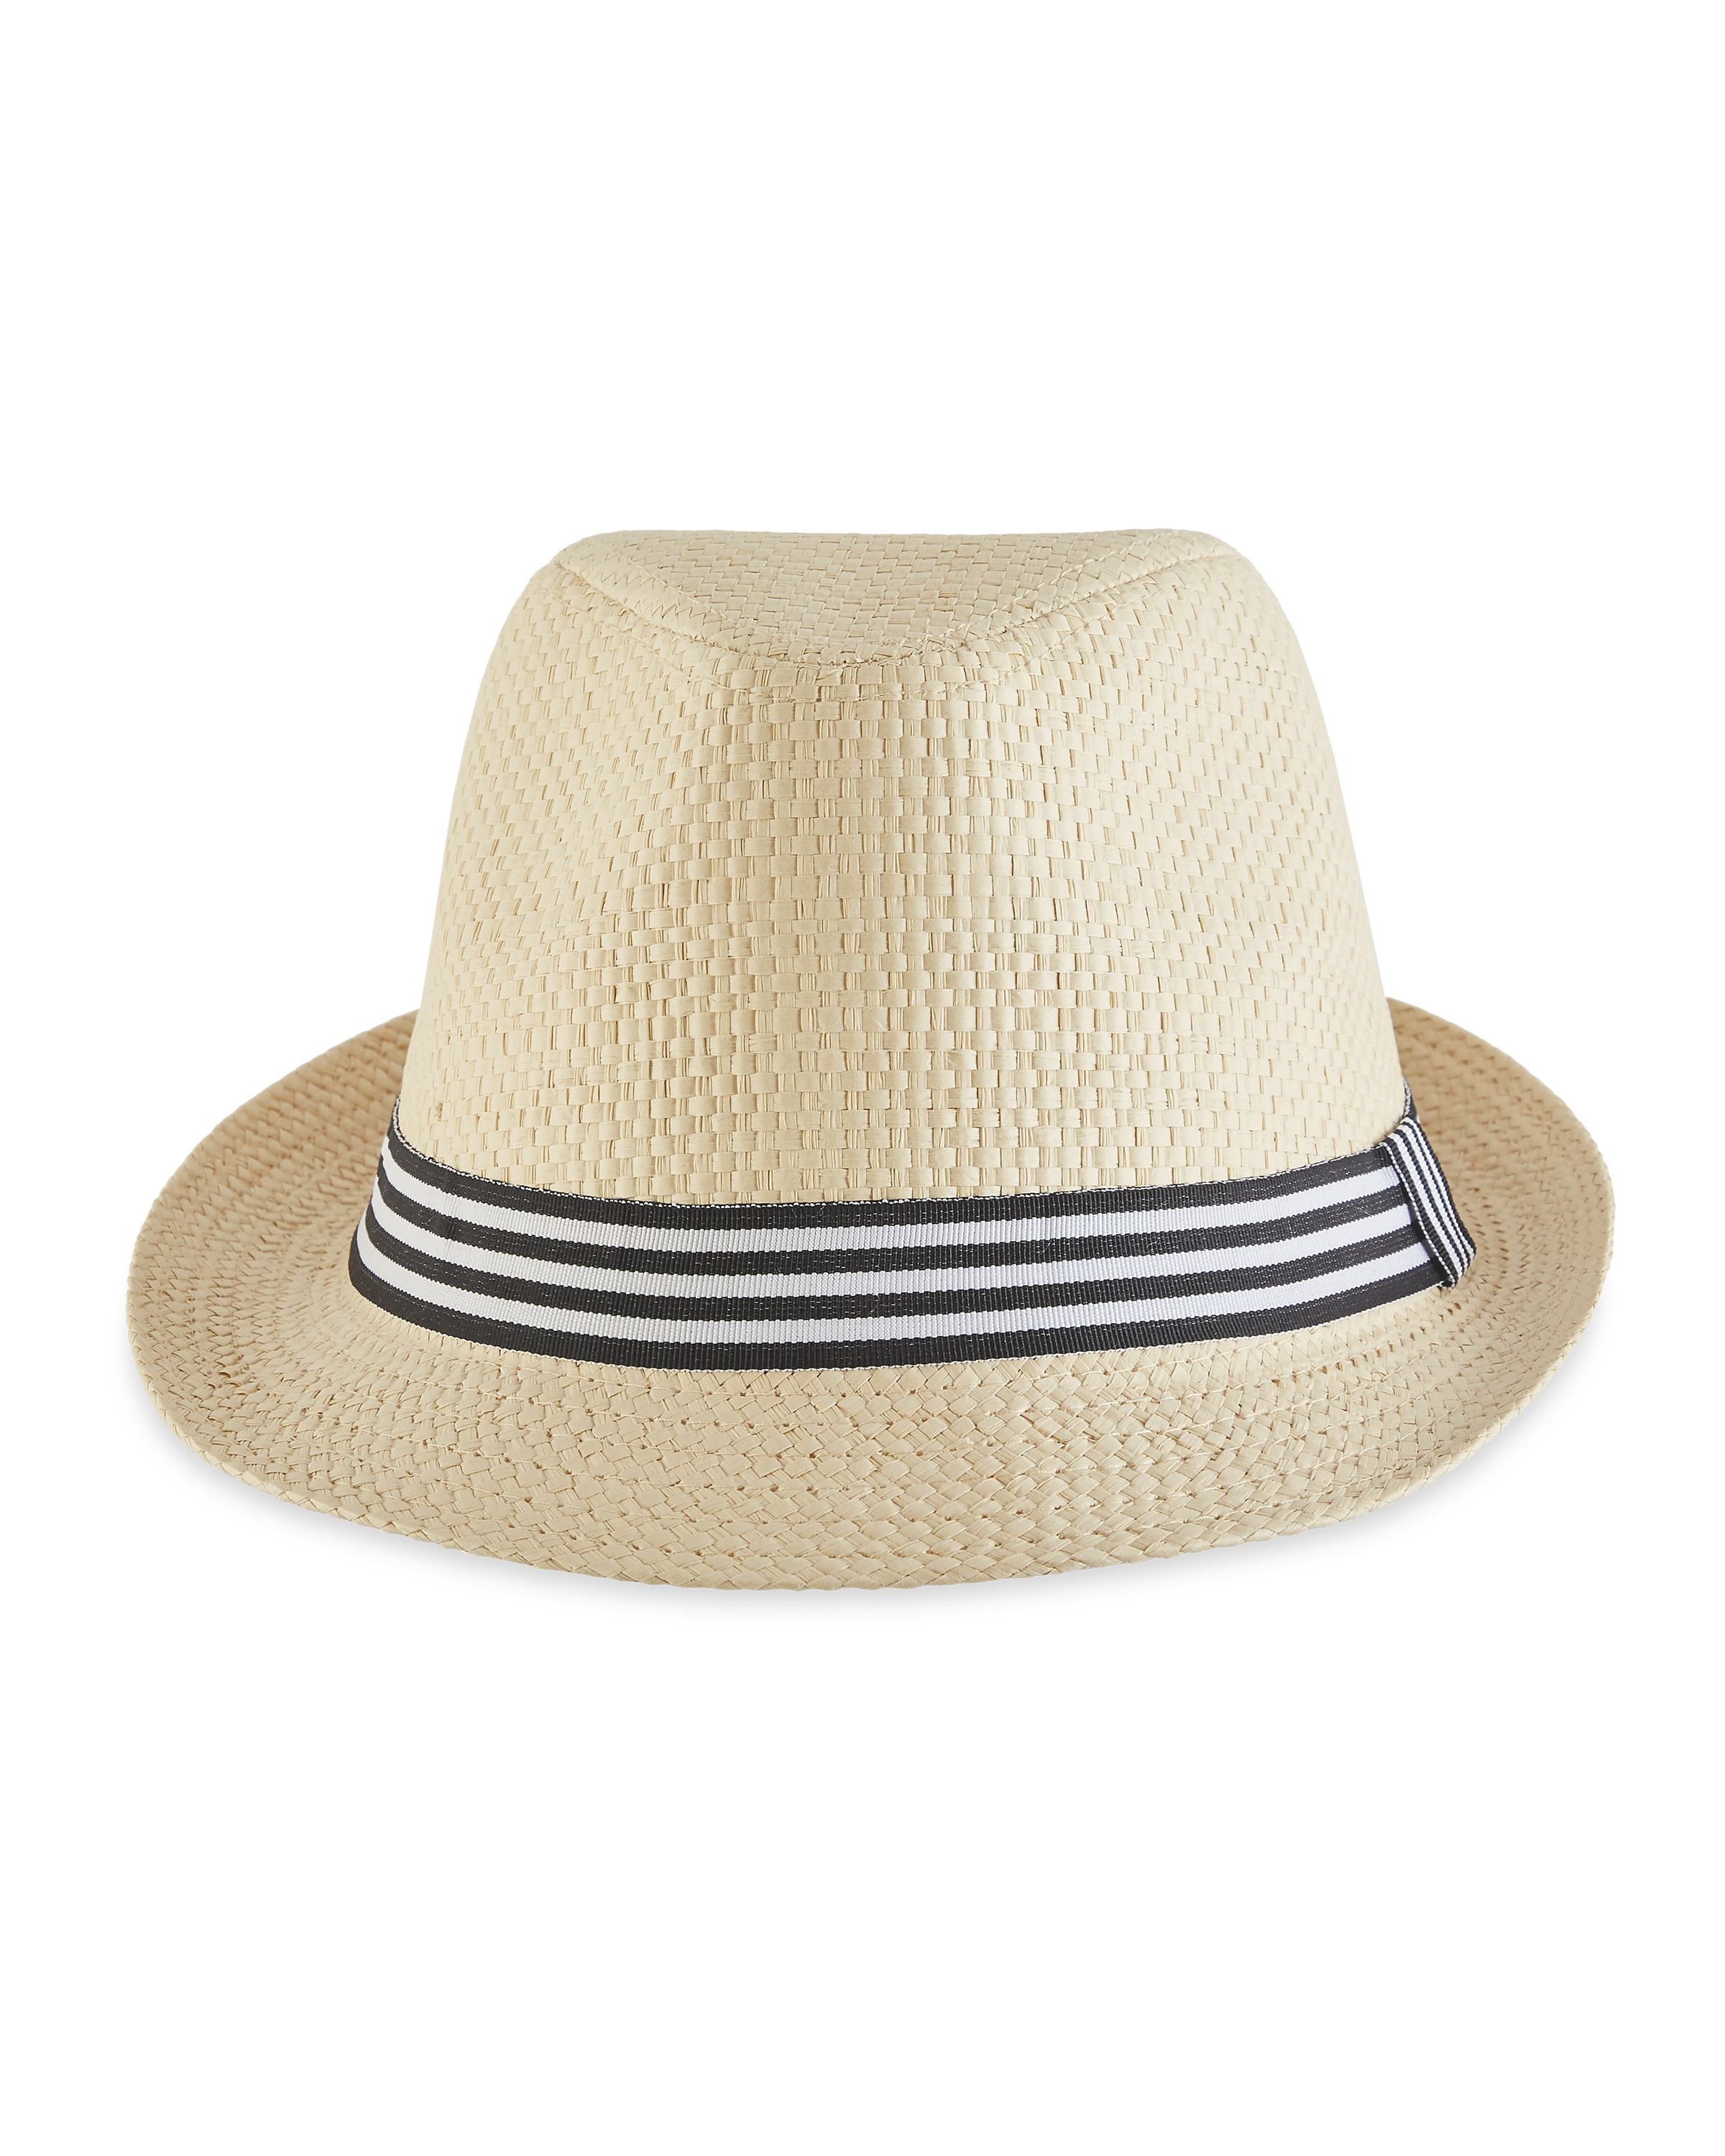 Men's Straw Beach Hat - ALDI UK